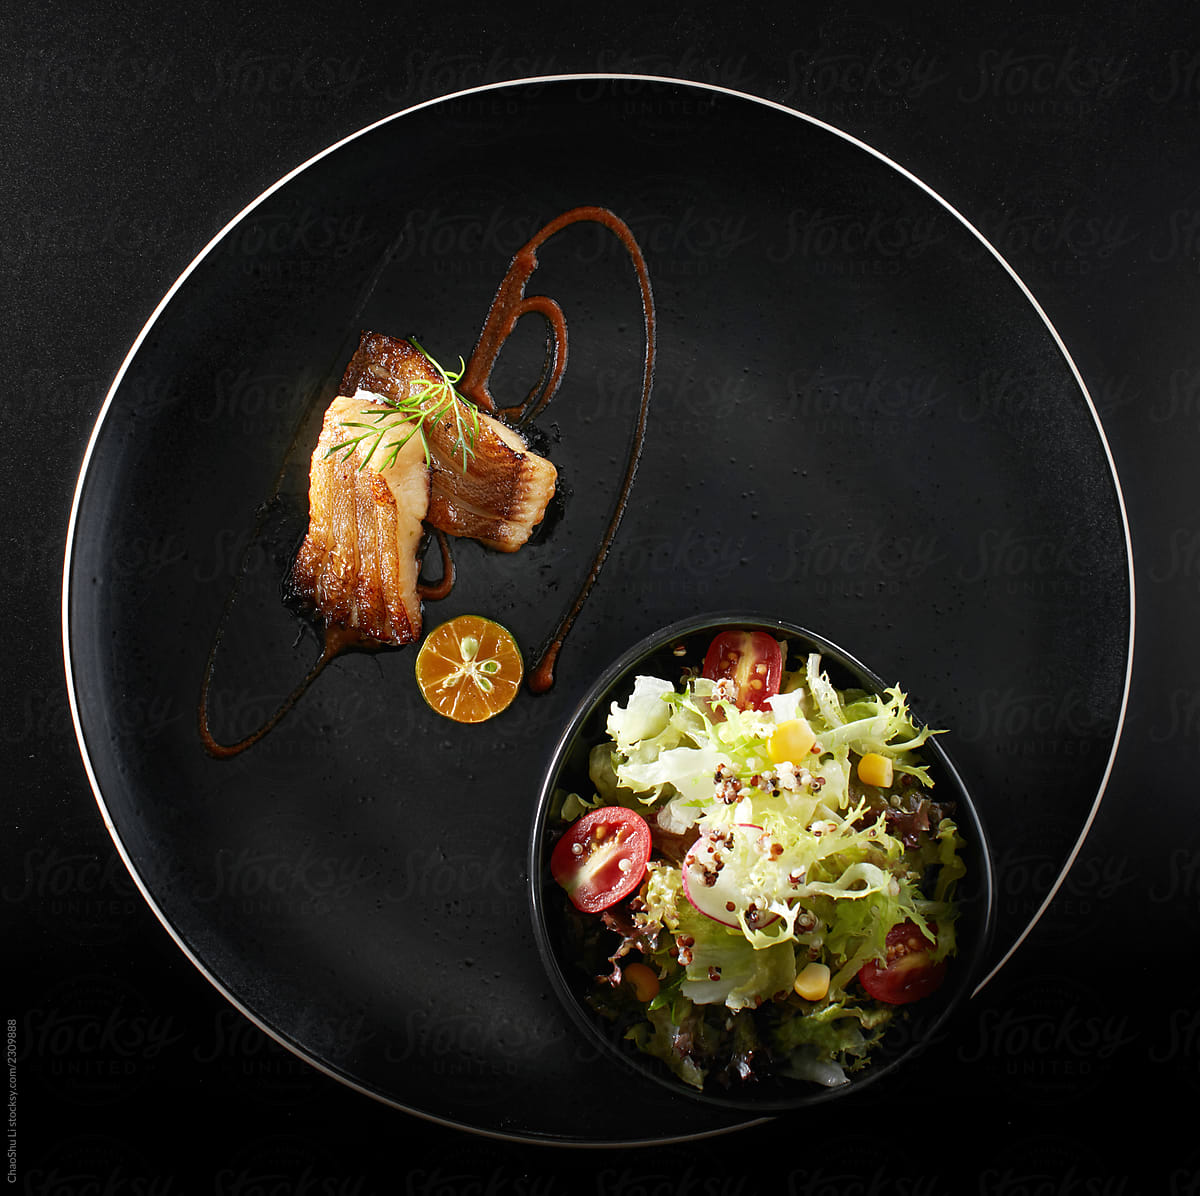 Exquisite Western cuisine, squid. Design tray on dark dish and background